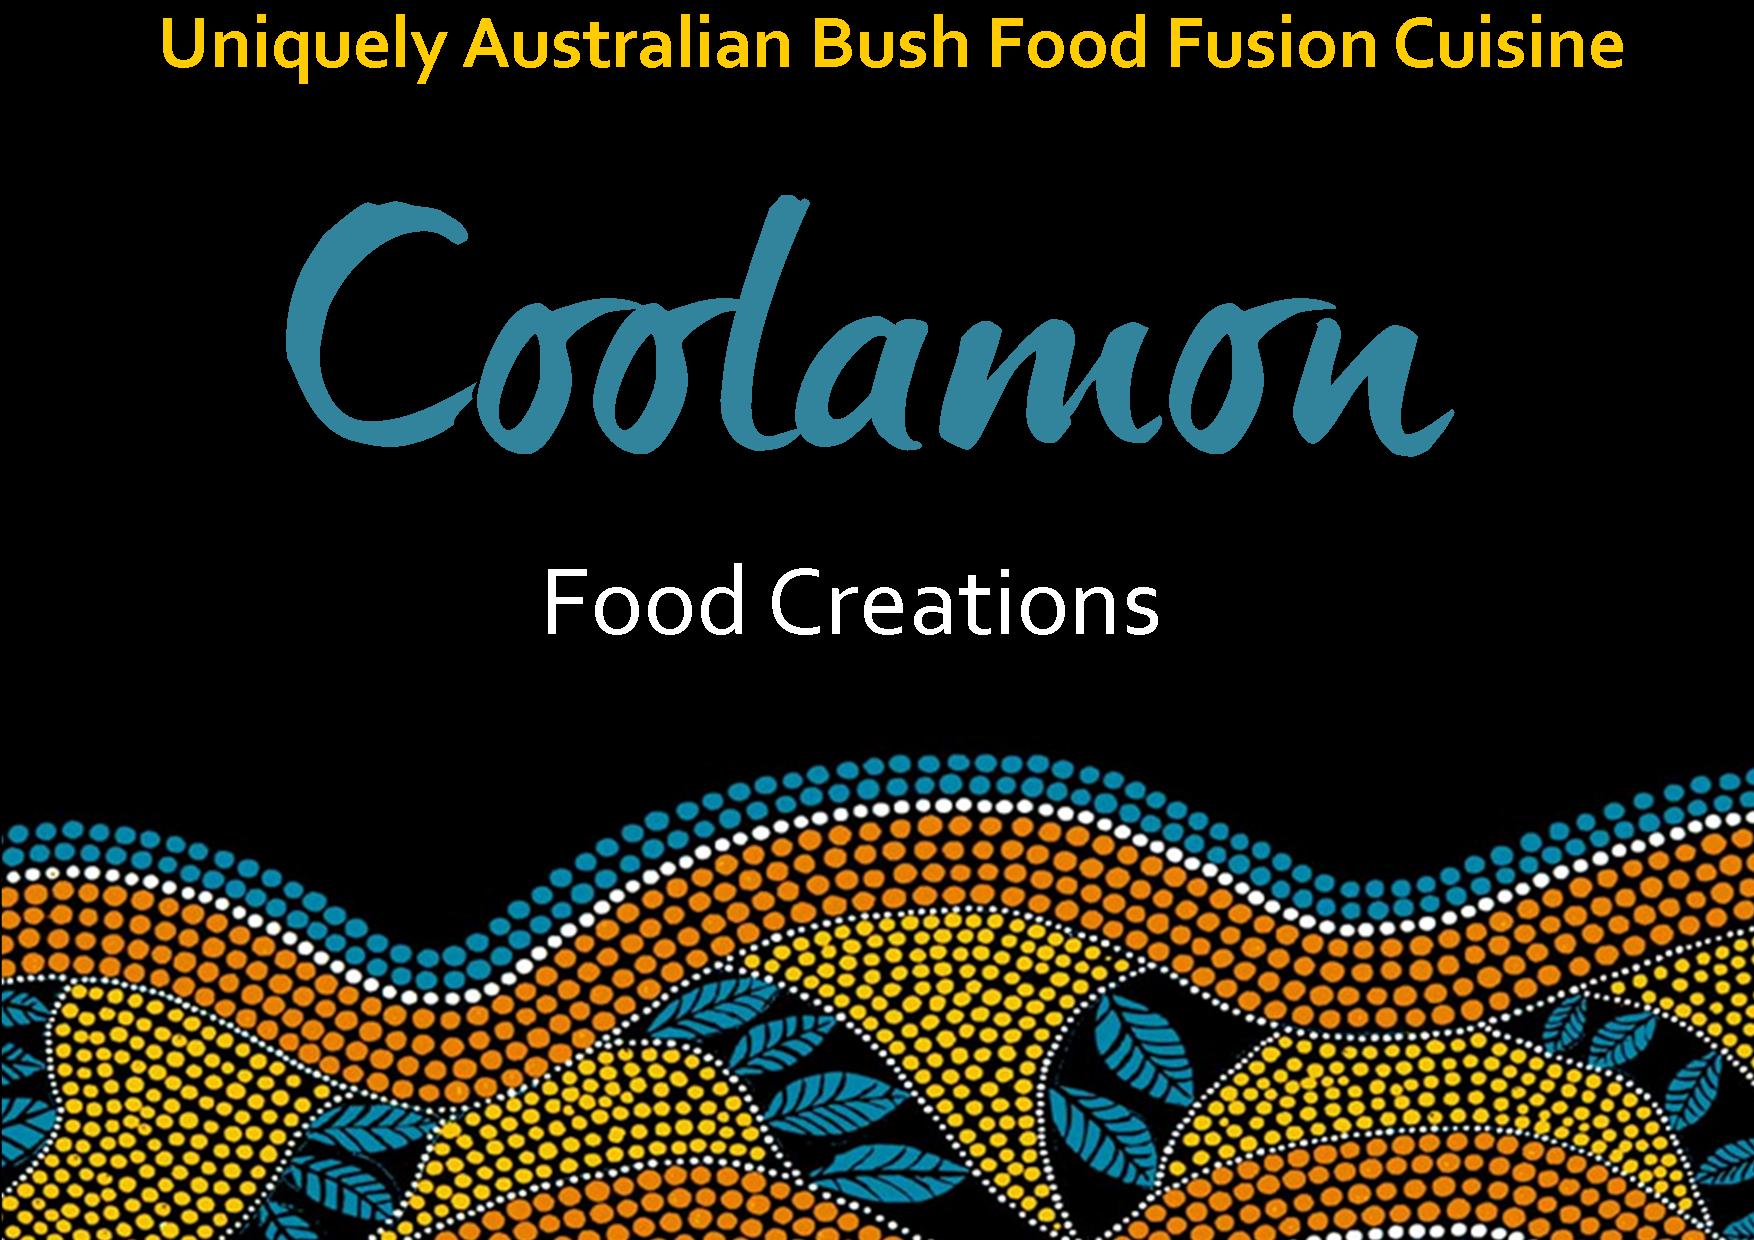 Coolamon Food Creations